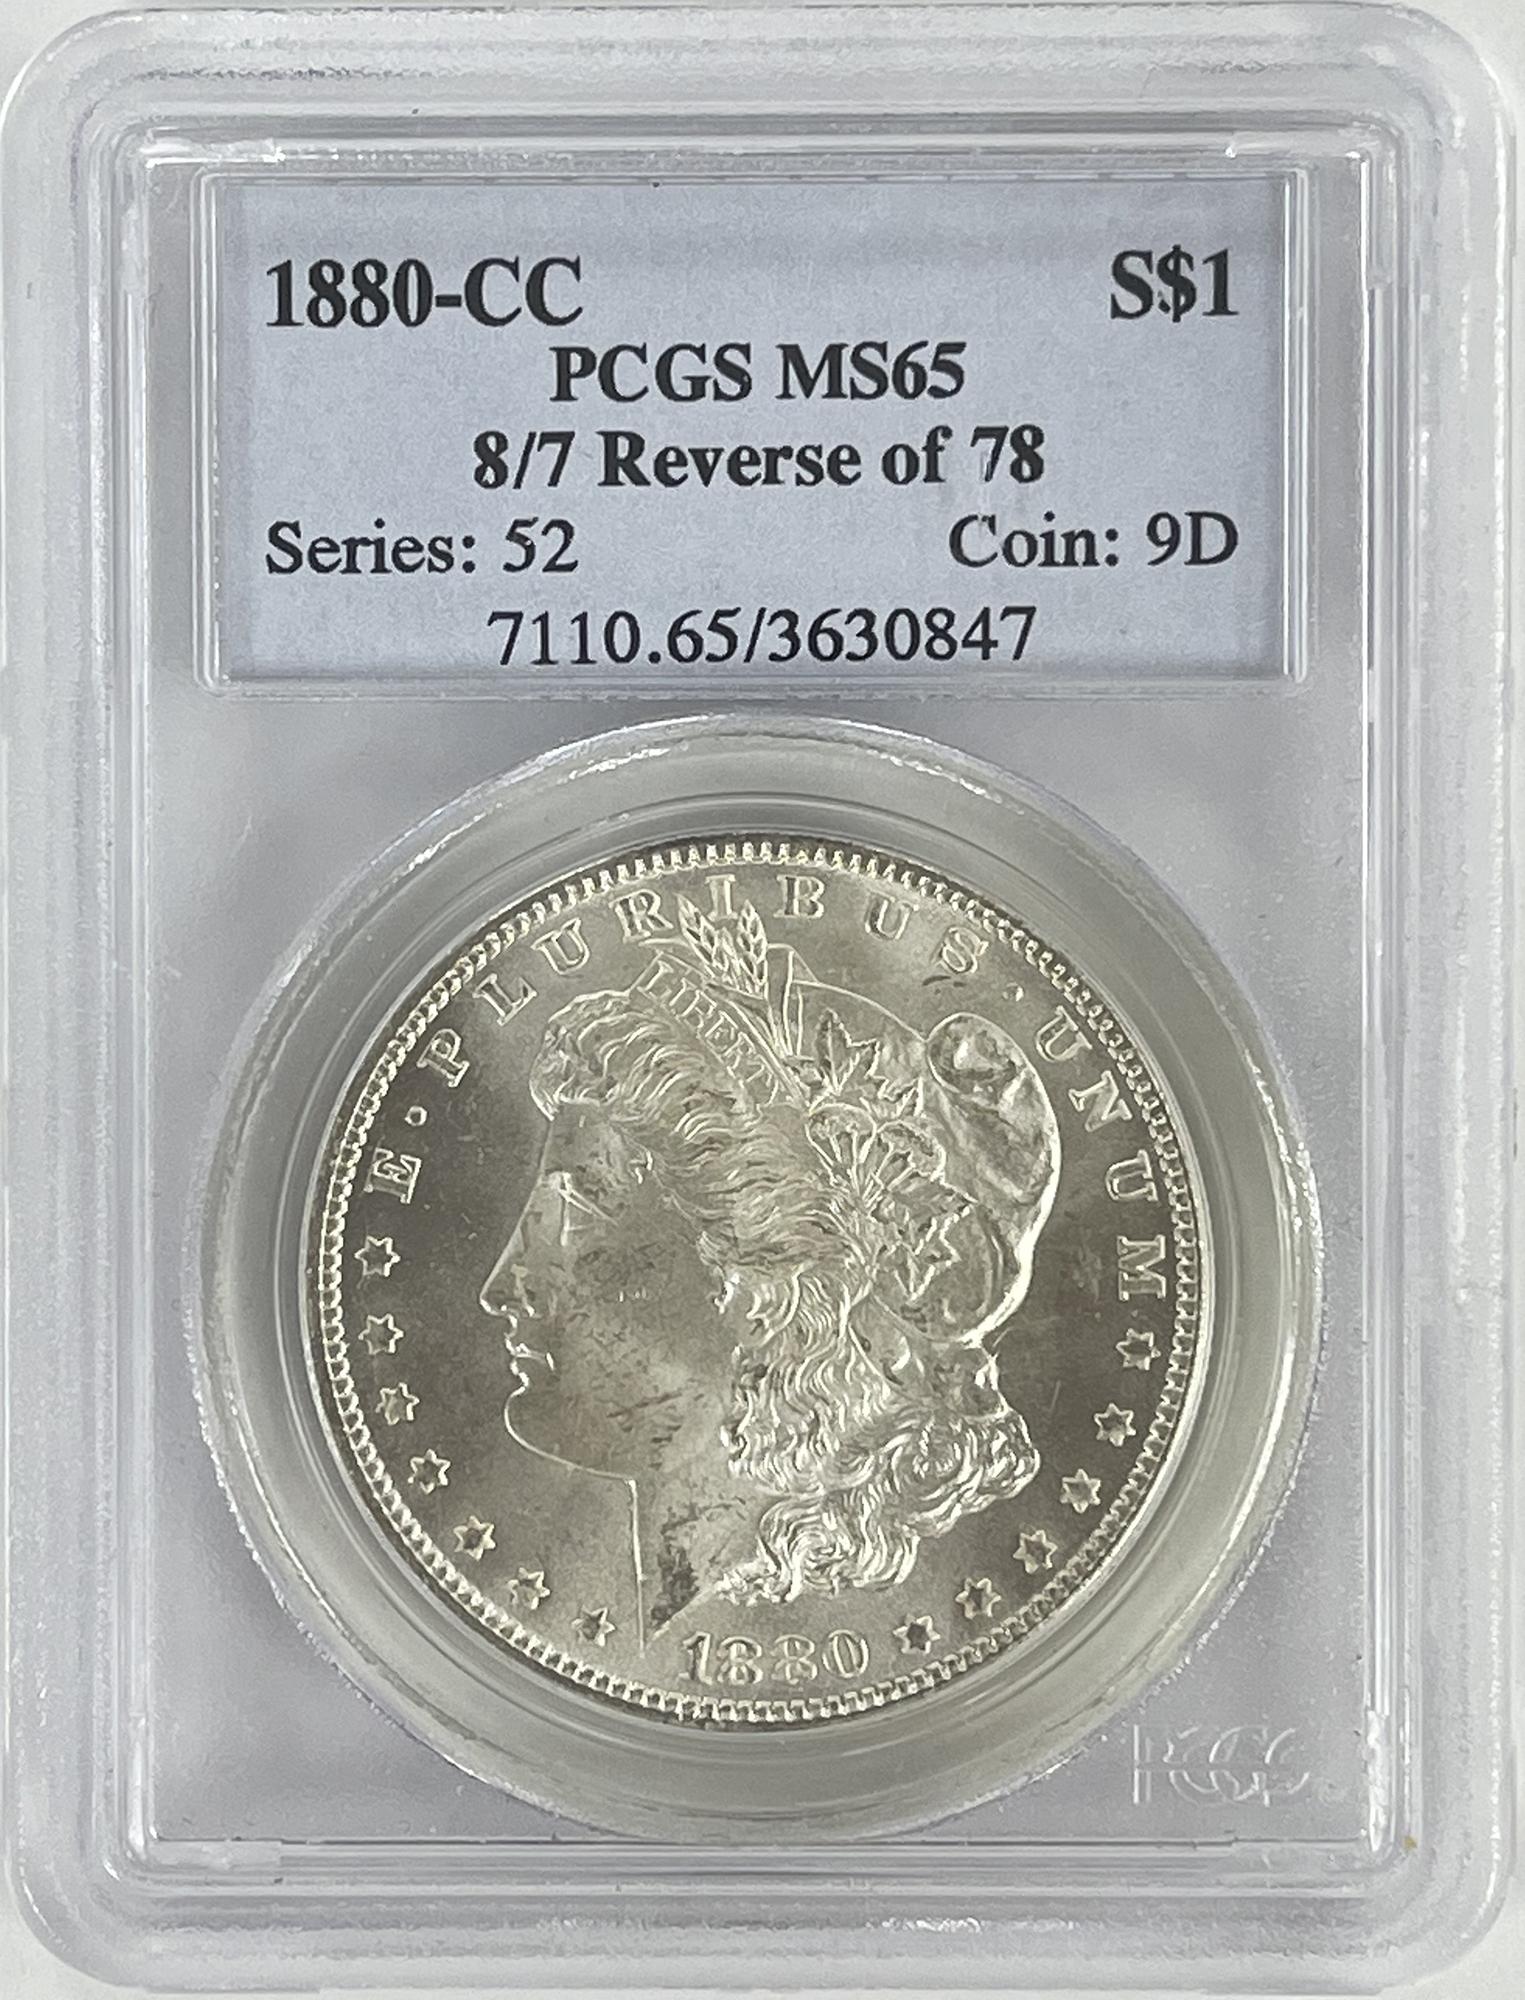 1880-CC 8/7 Reverse of 78 Morgan Silver Dollar in PCGS MS 65 -VAM 7-